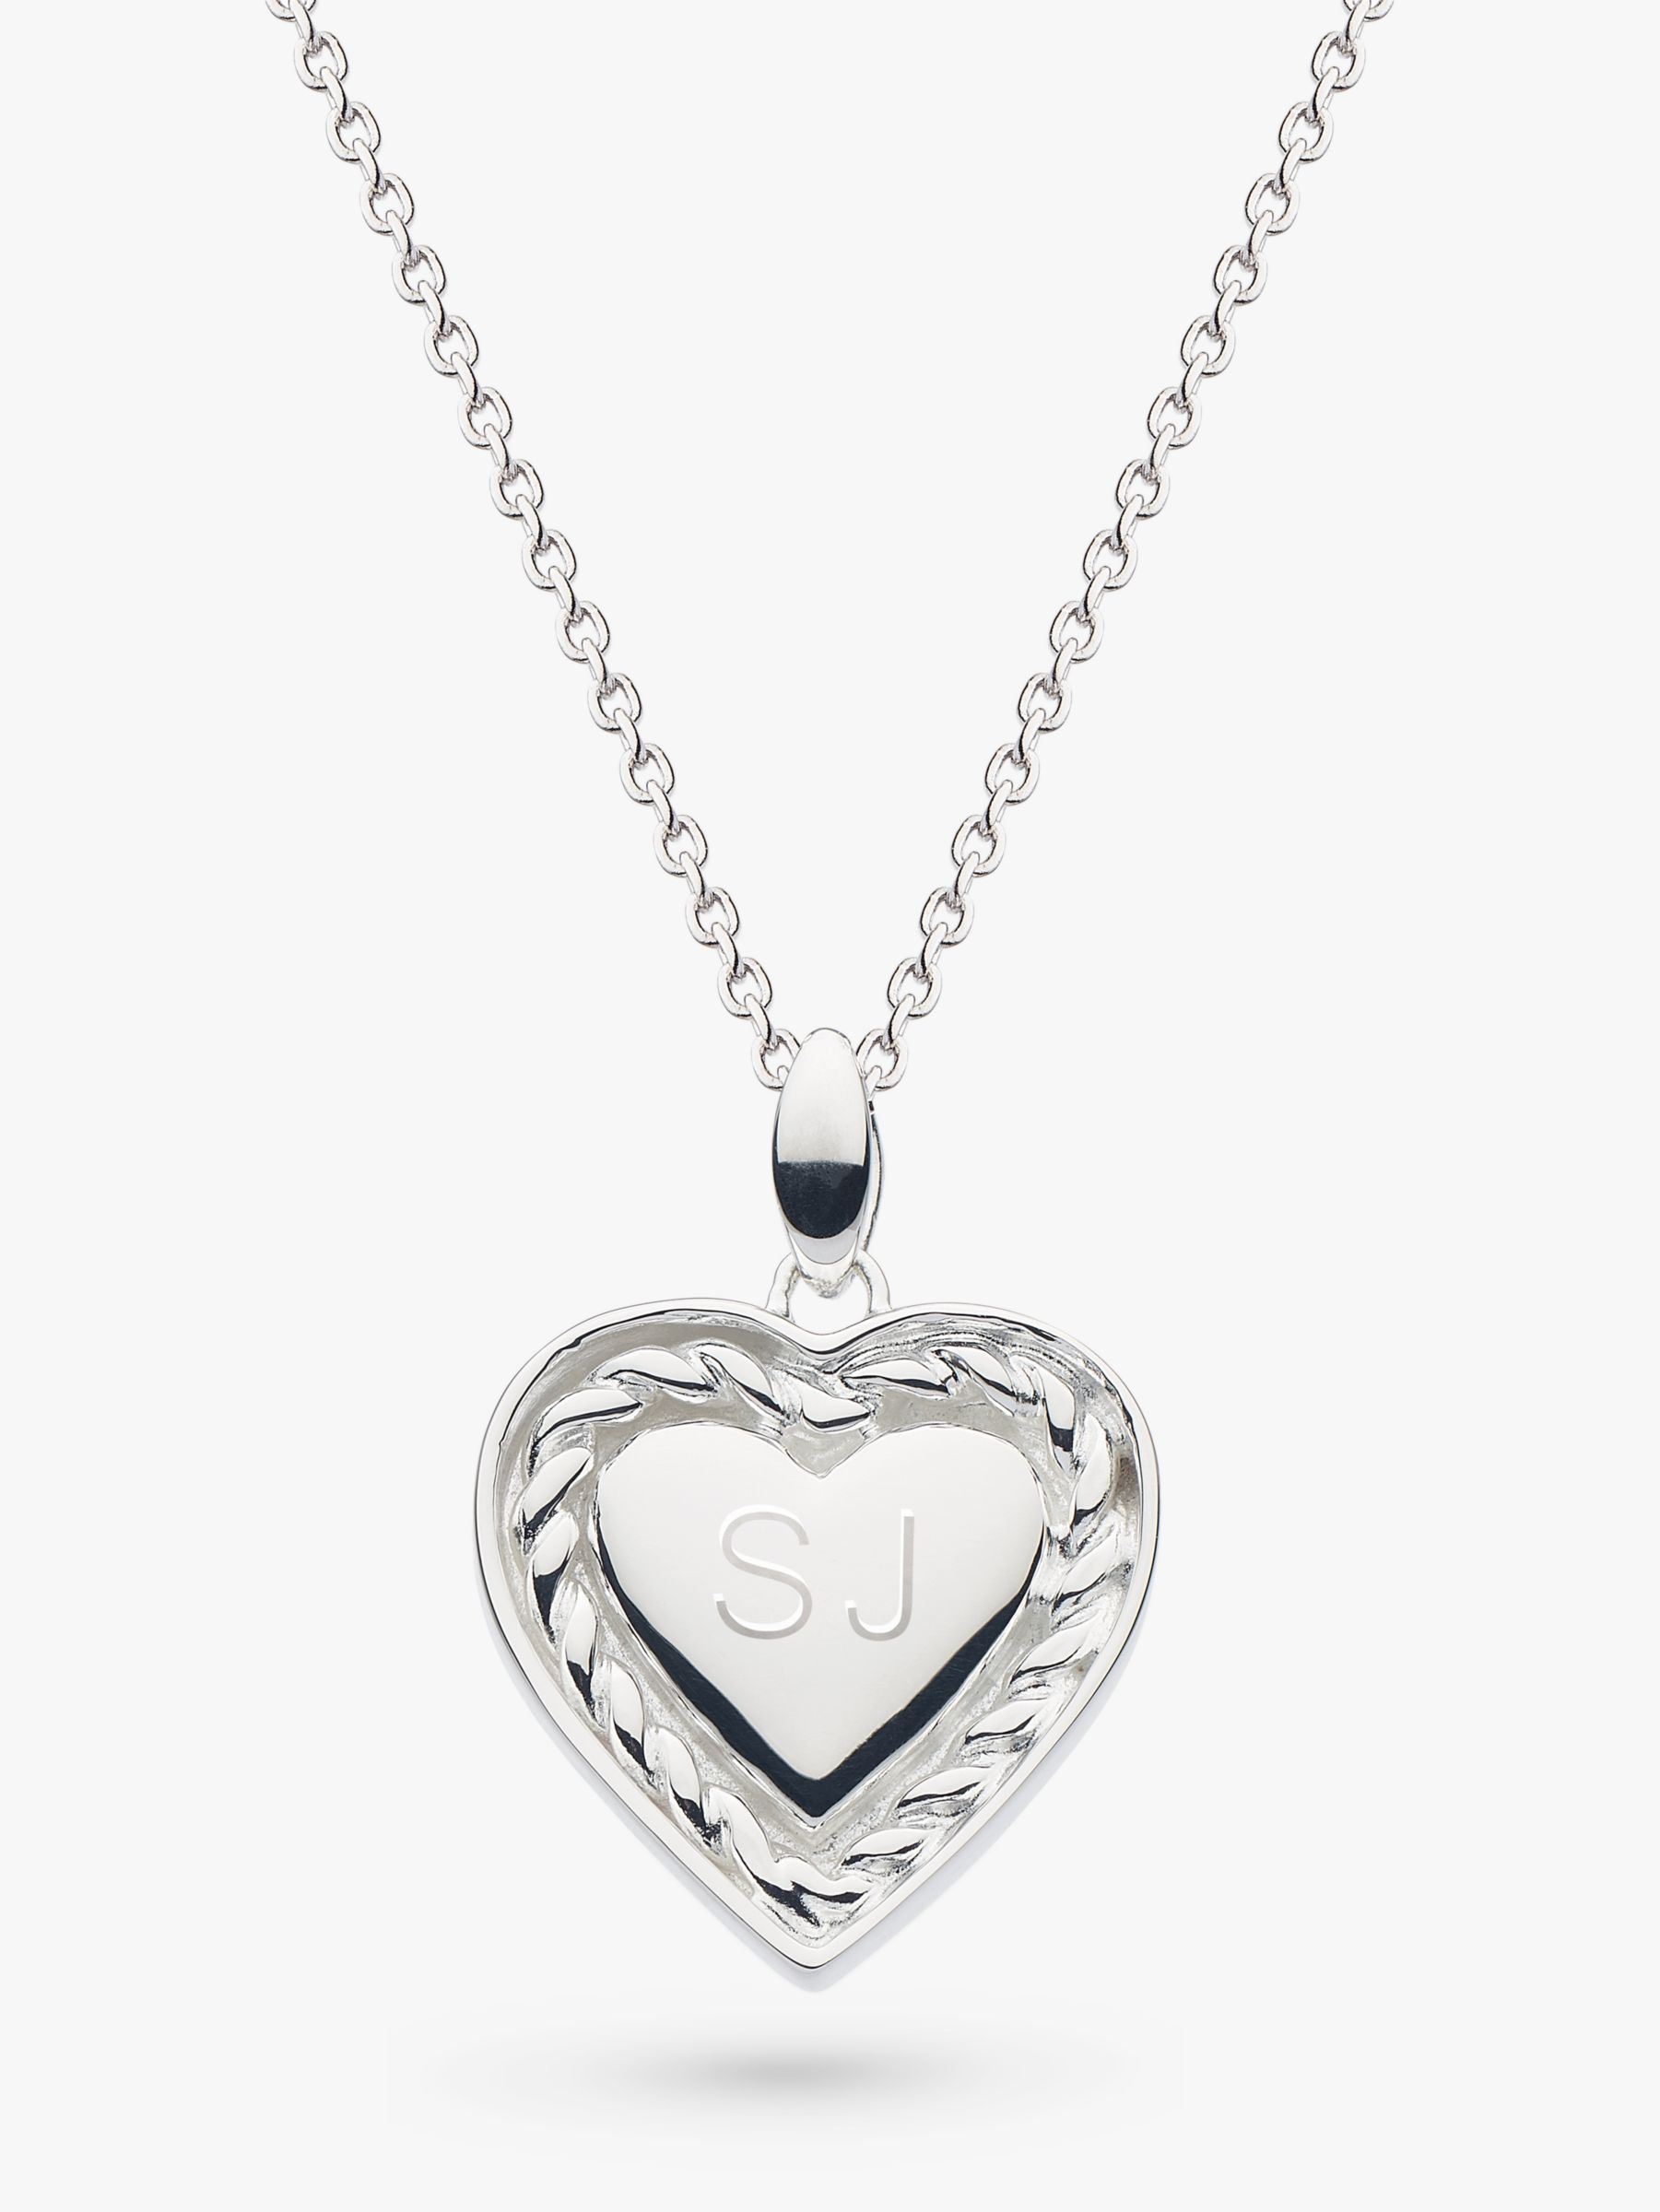 Kit Heath Personalised Sterling Silver Twist Heart Pendant Necklace, Silver